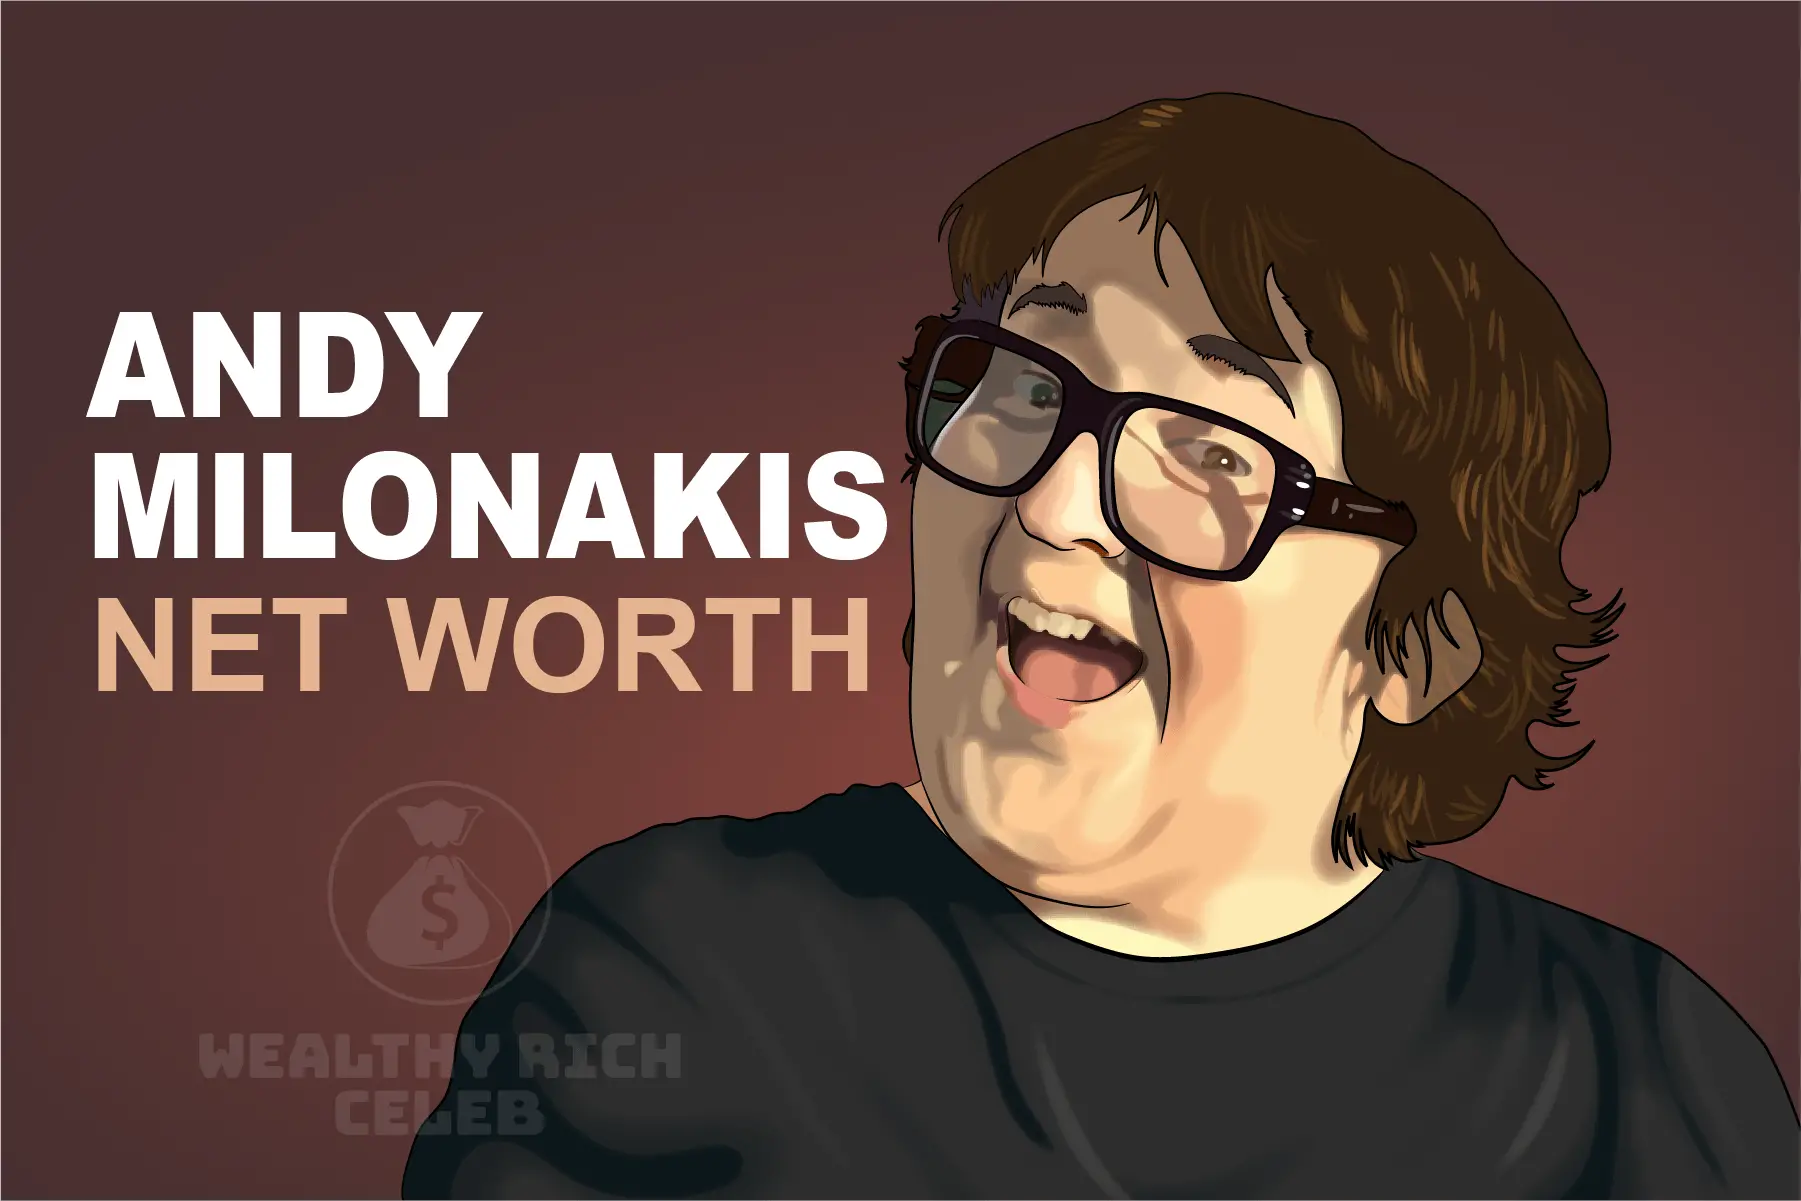 Andy Milonakis net worth